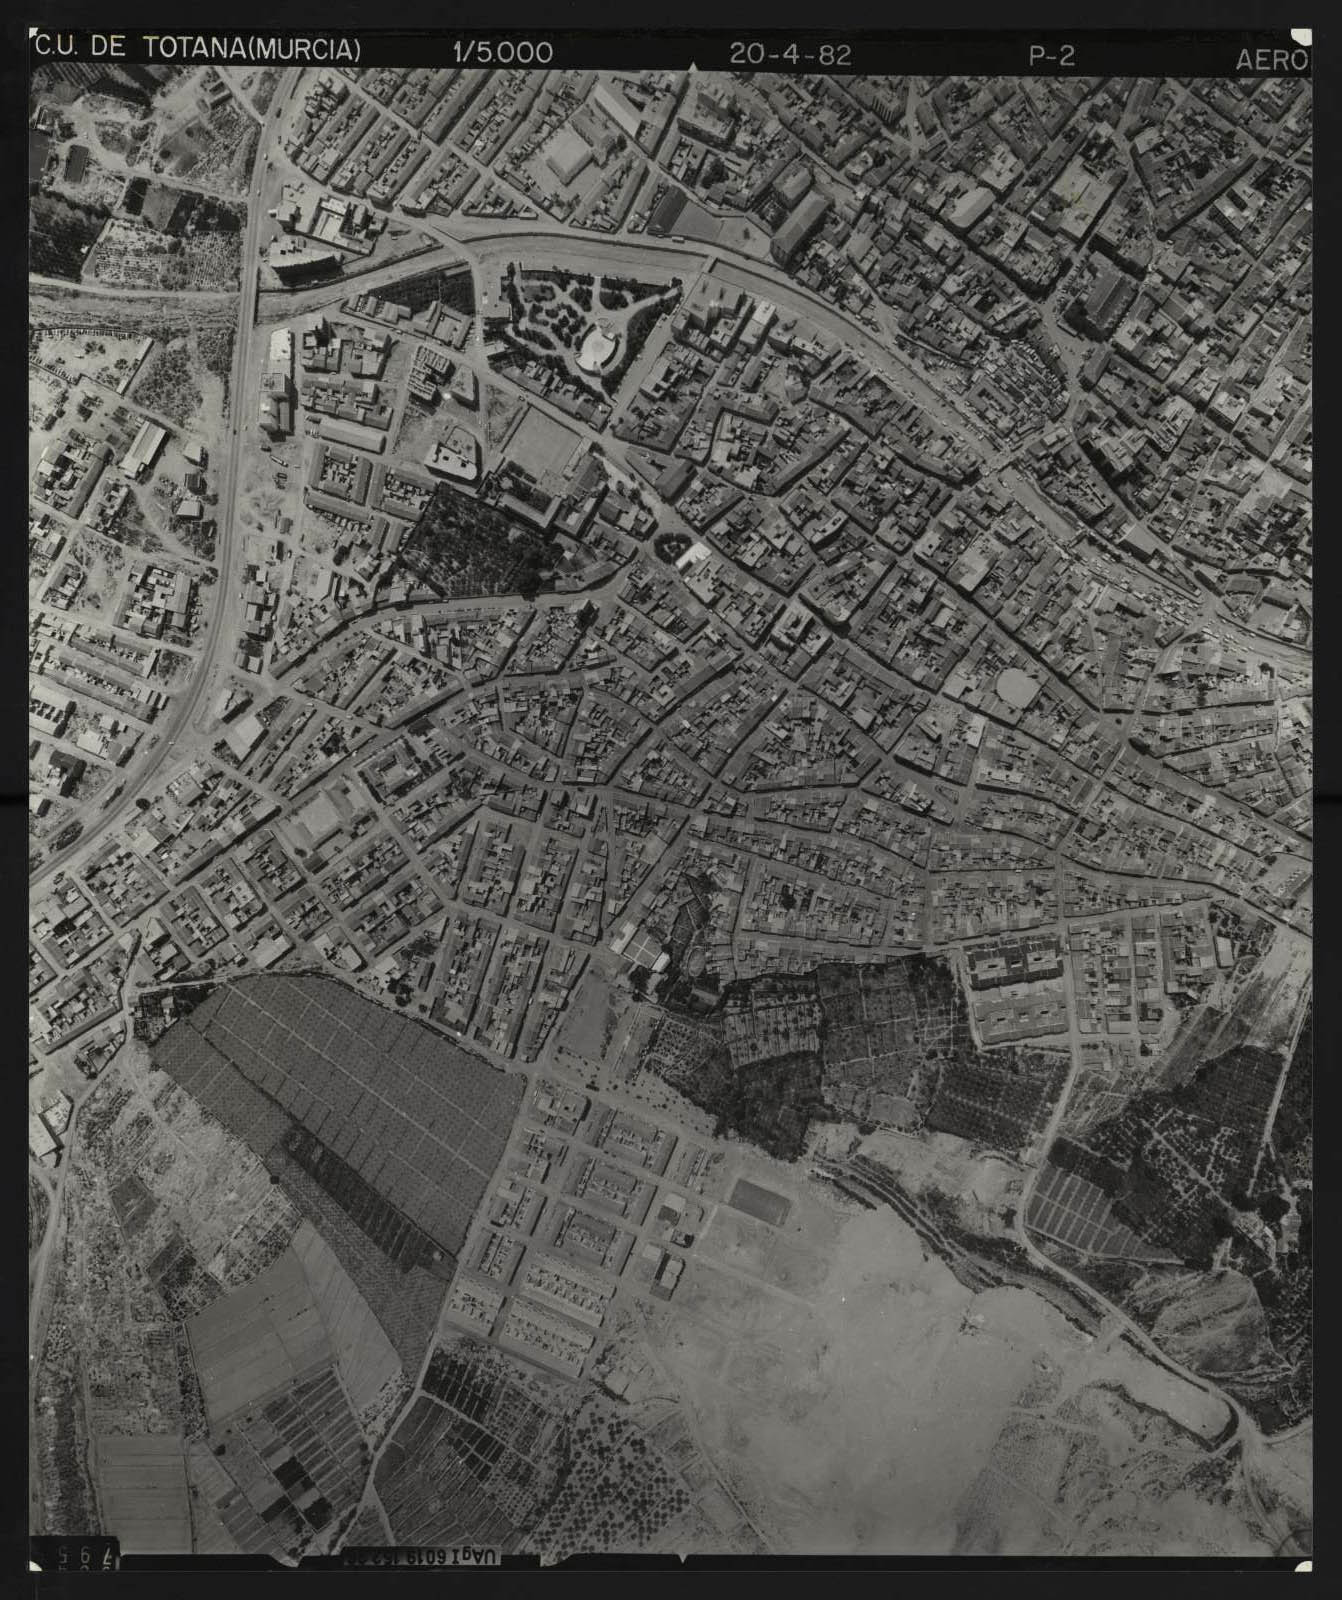 Fotografía aérea del casco urbano de Totana